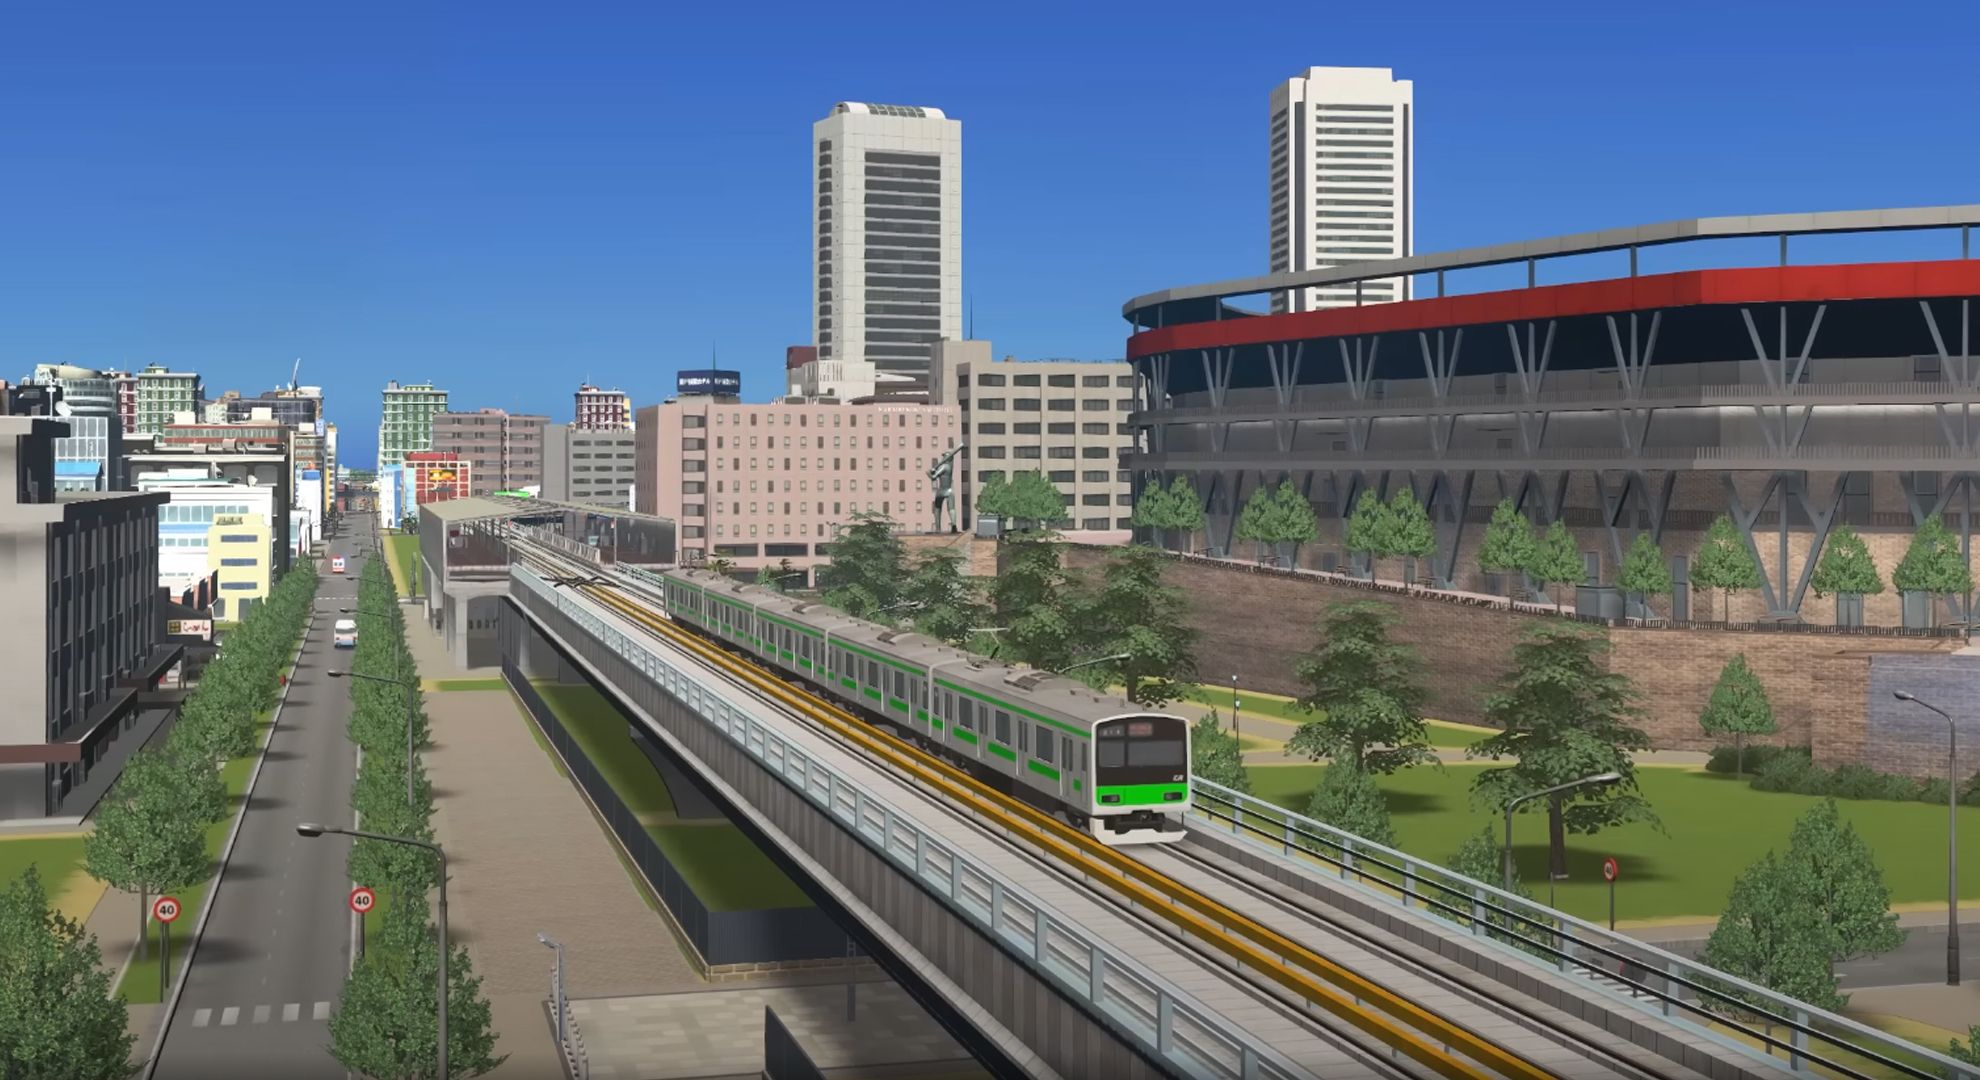 A railway in Cities Skylines